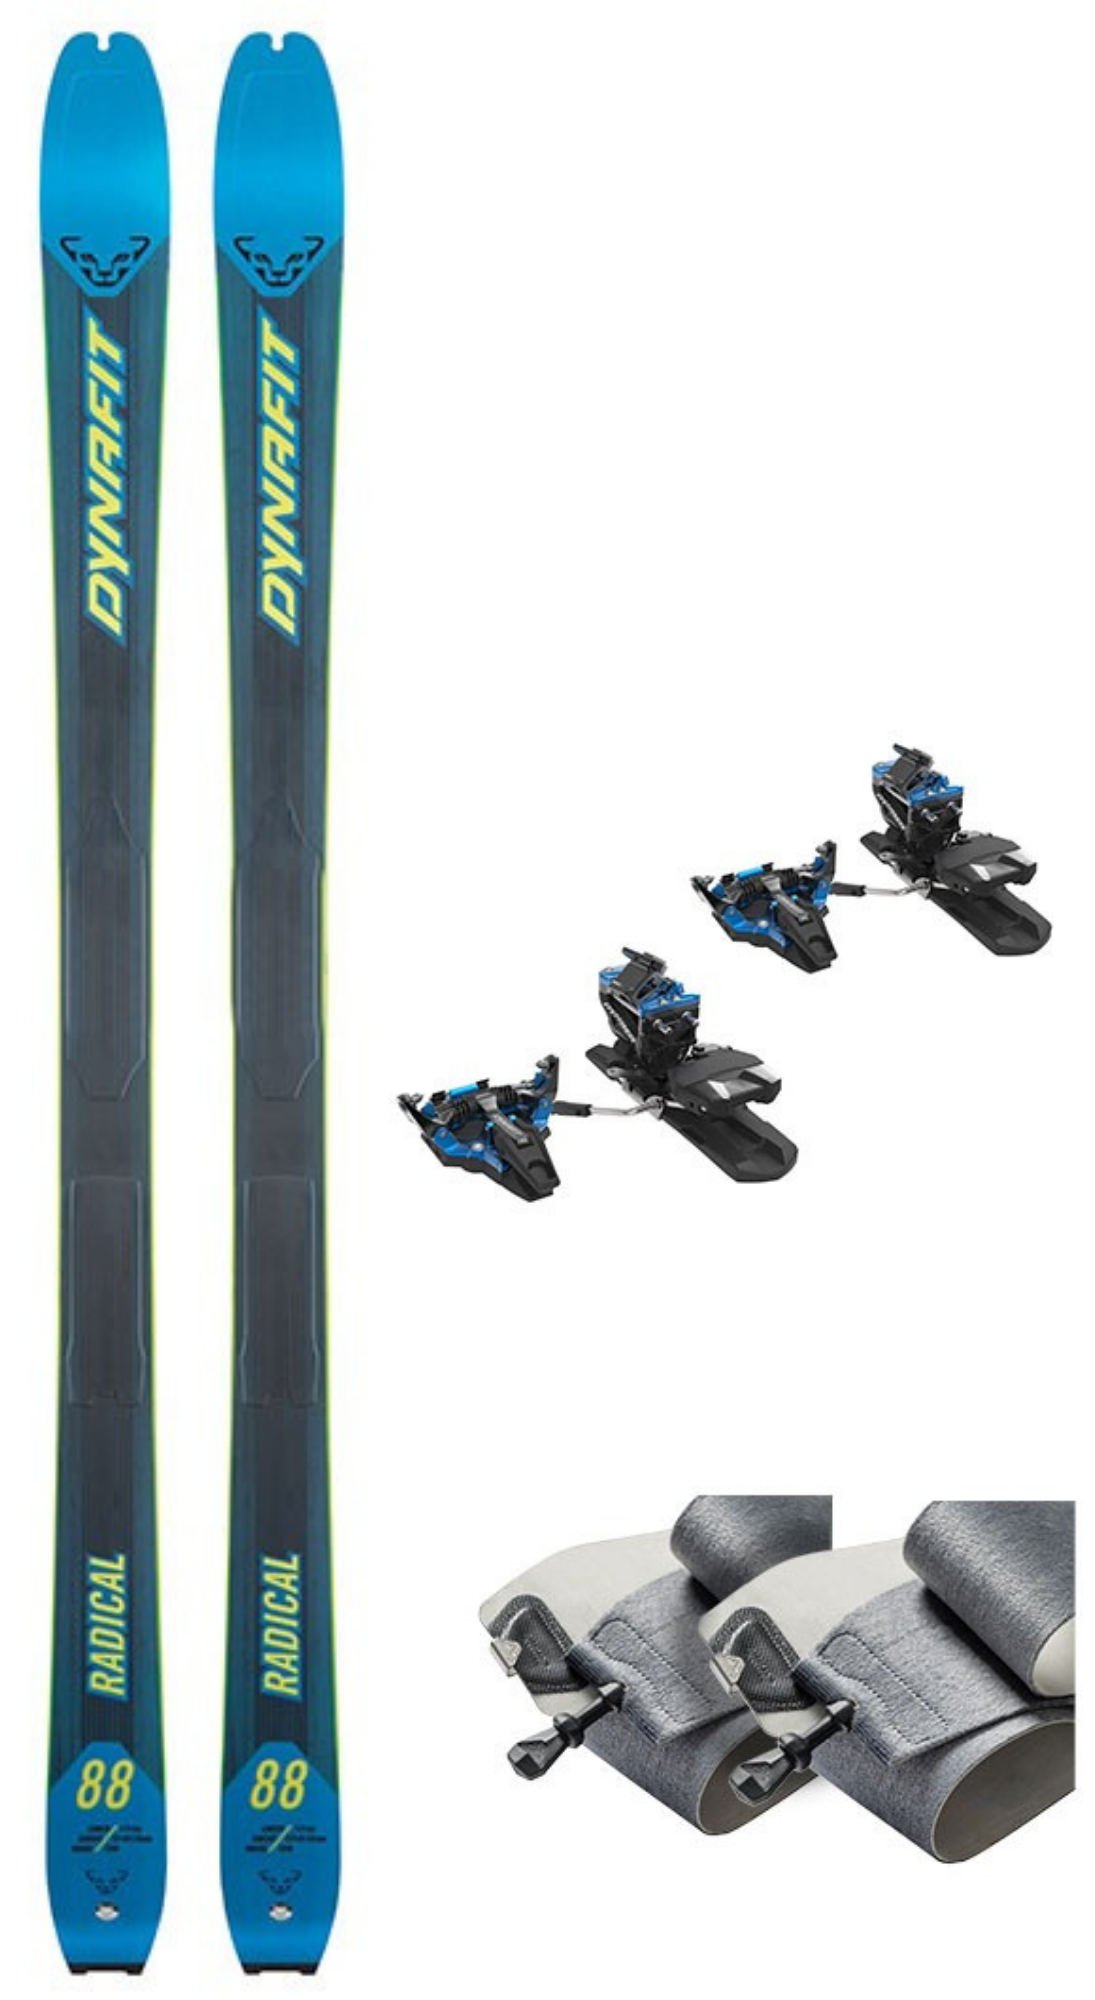 Dynafit Radical 88 Ski + Dynafit Radical Binding + Speedskin